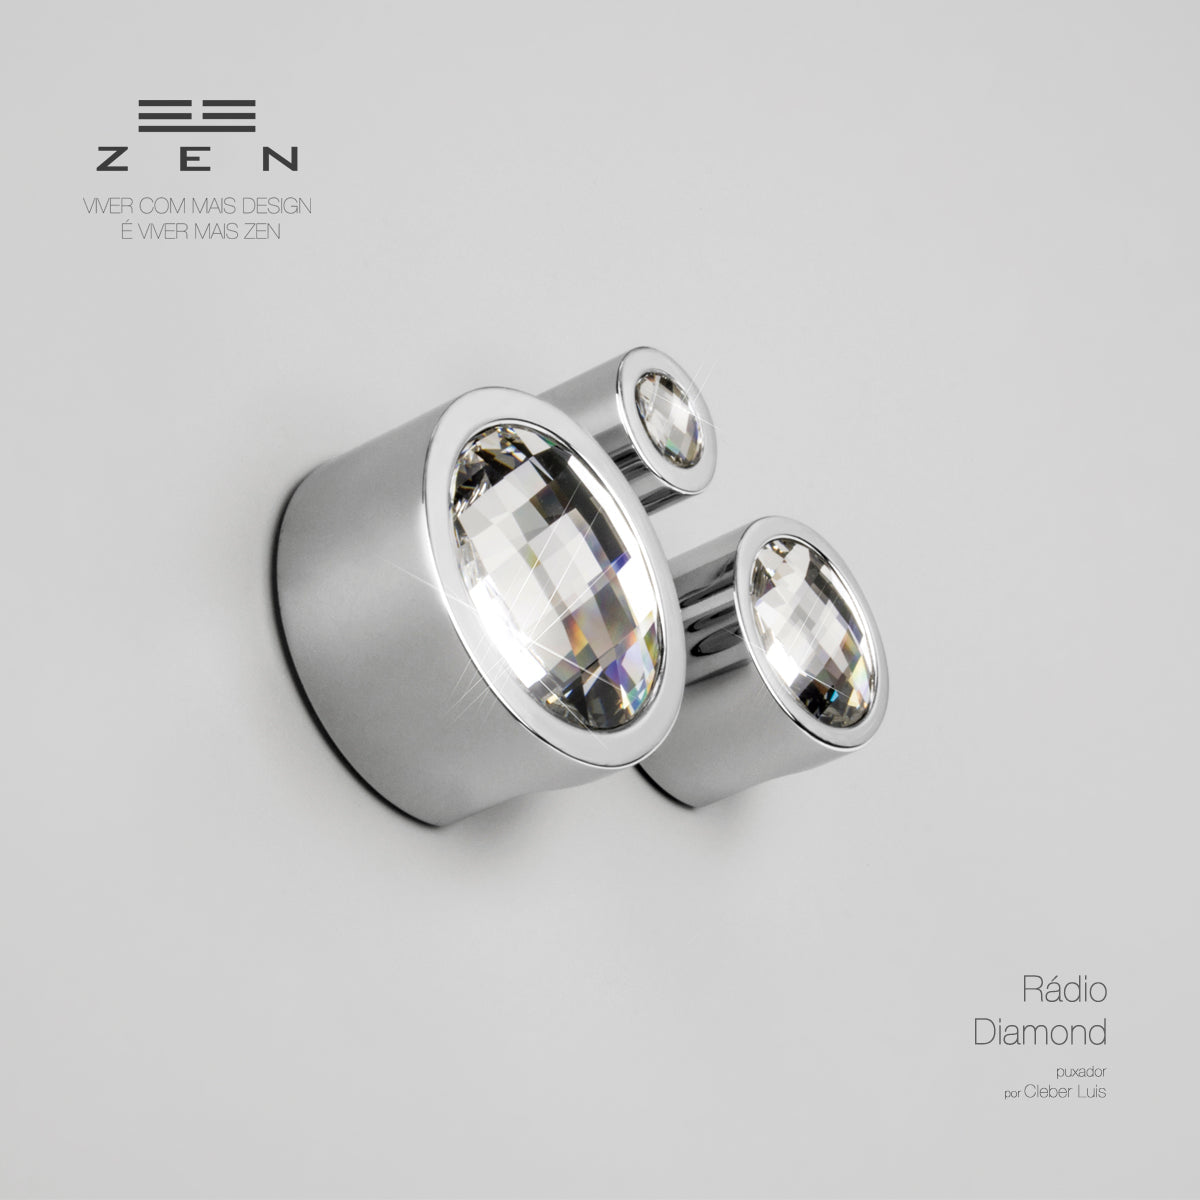 ZEN Design Radio 2" Diameter Chrome Diamond Cabinet Knob